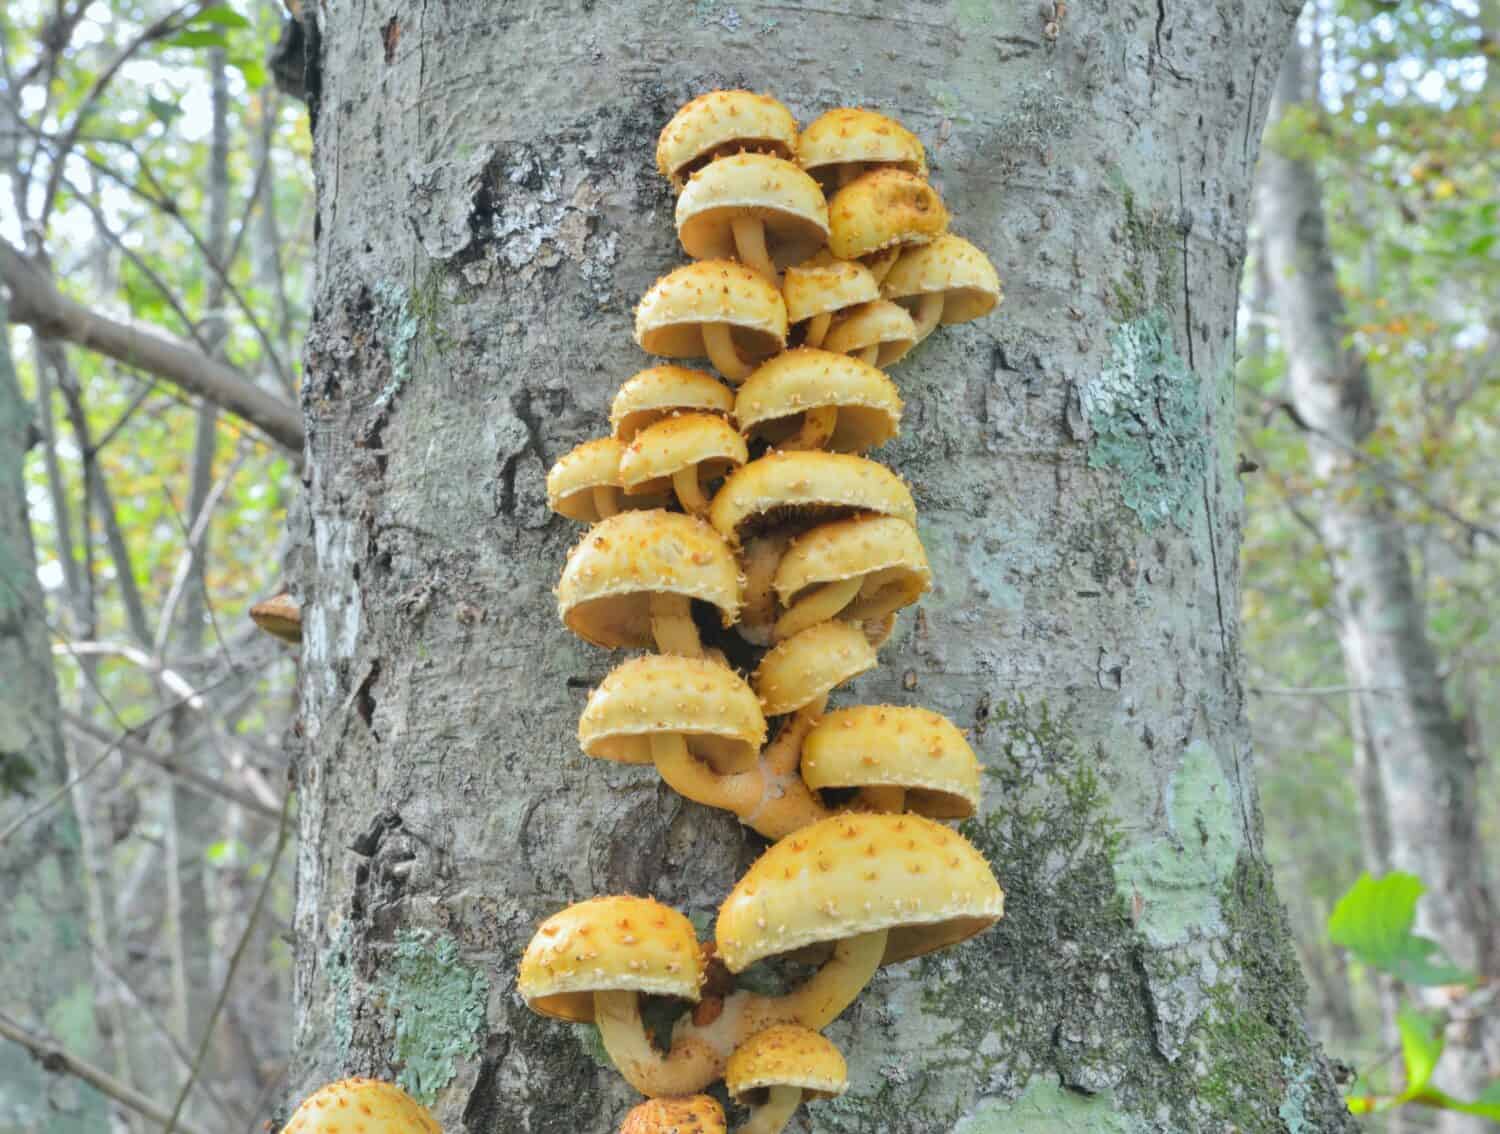 A close up of the edible mushrooms on tree (Pholiota adiposa).